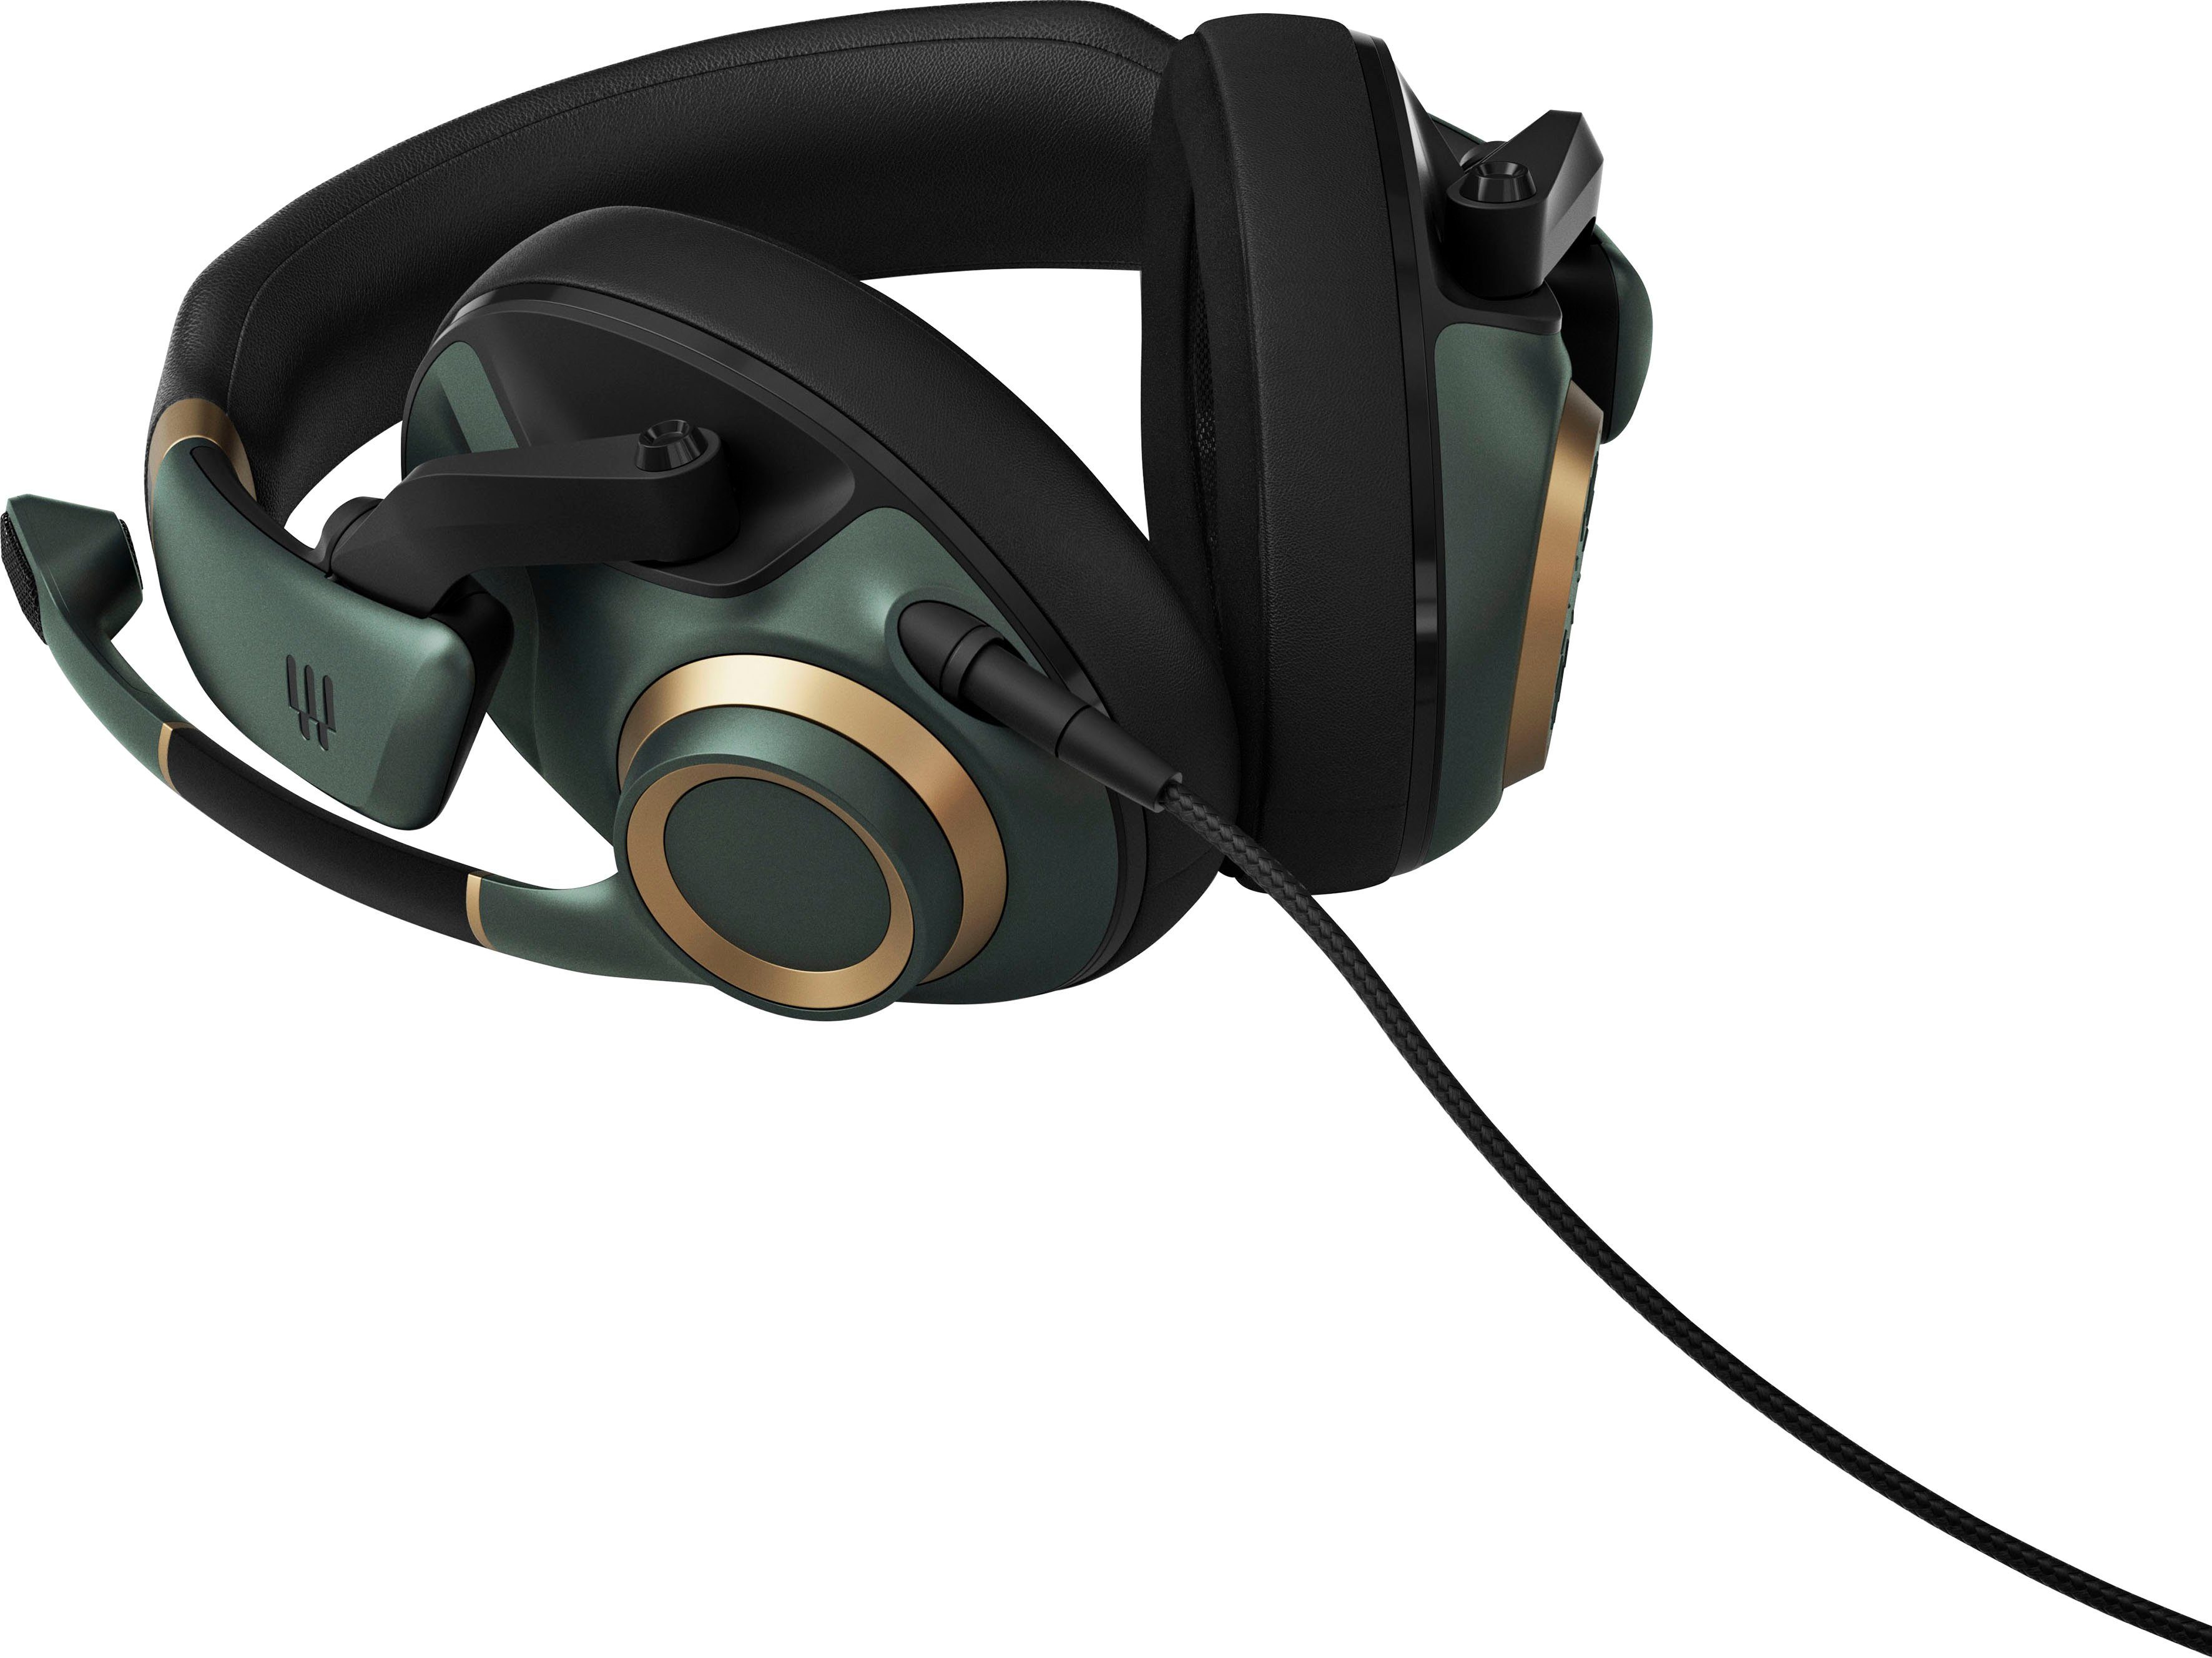 EPOS H6 Pro Closed Gaming-Headset Acoustic grün